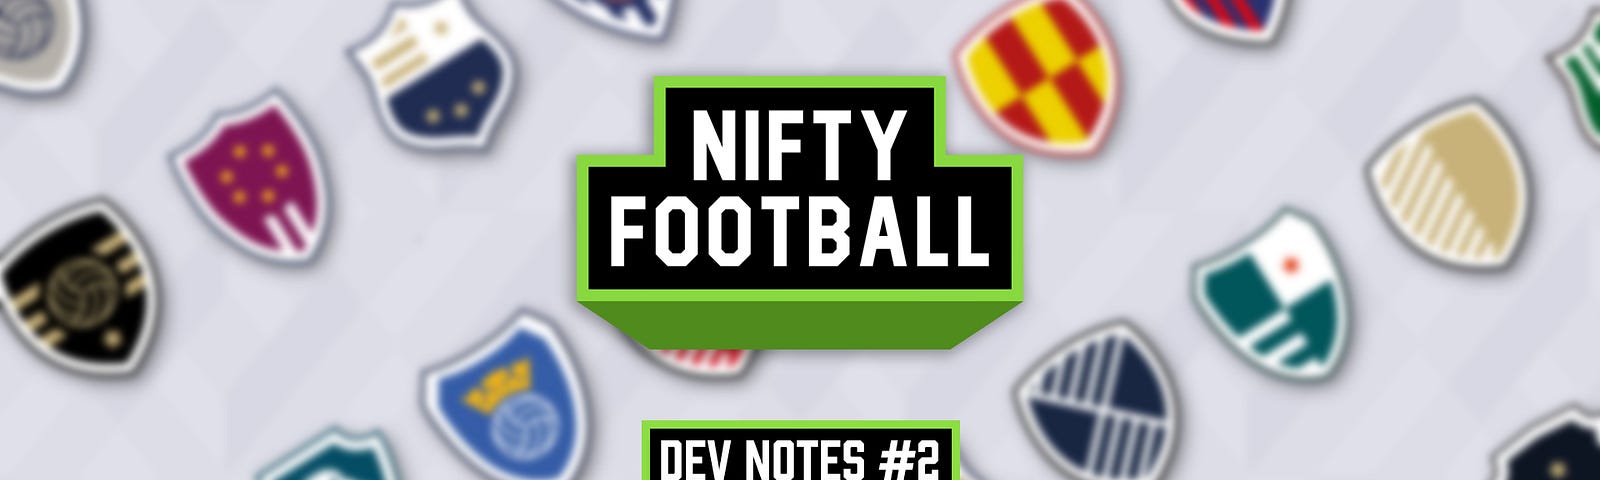 Nifty Football logo and ‘Dev Notes #2’